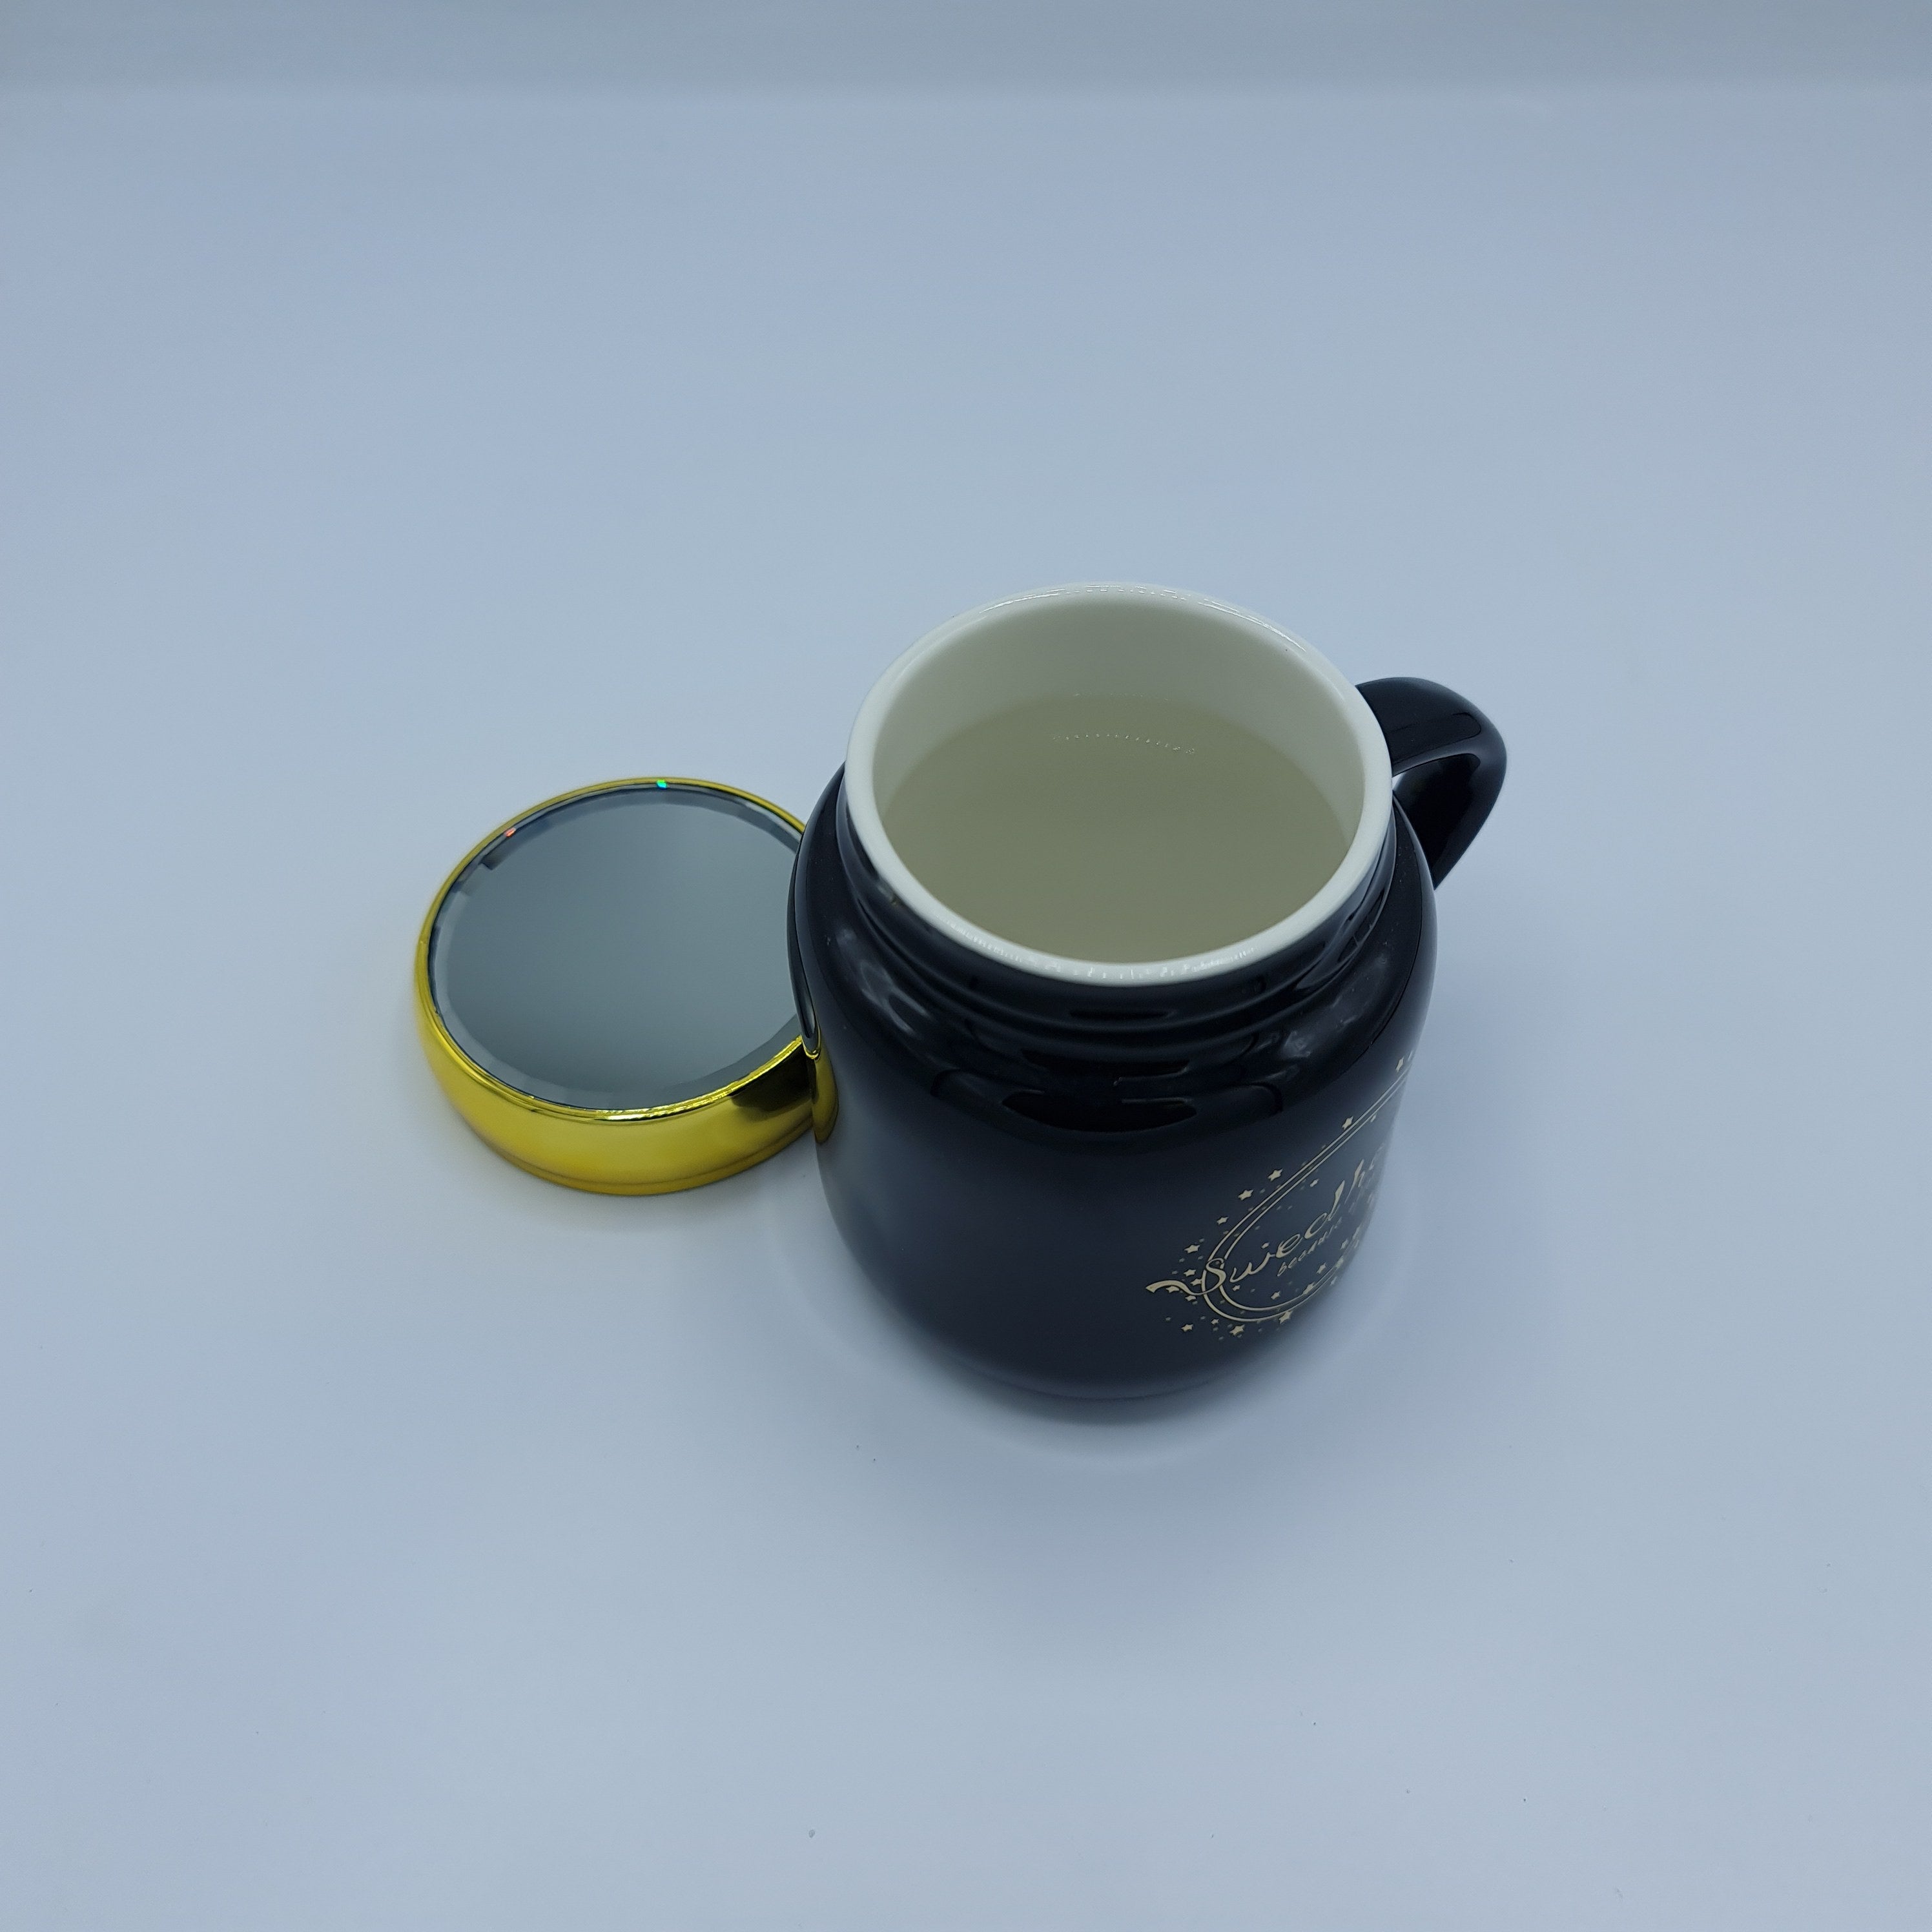 Tea or Coffee Mug - Maha fashions -  Mugs